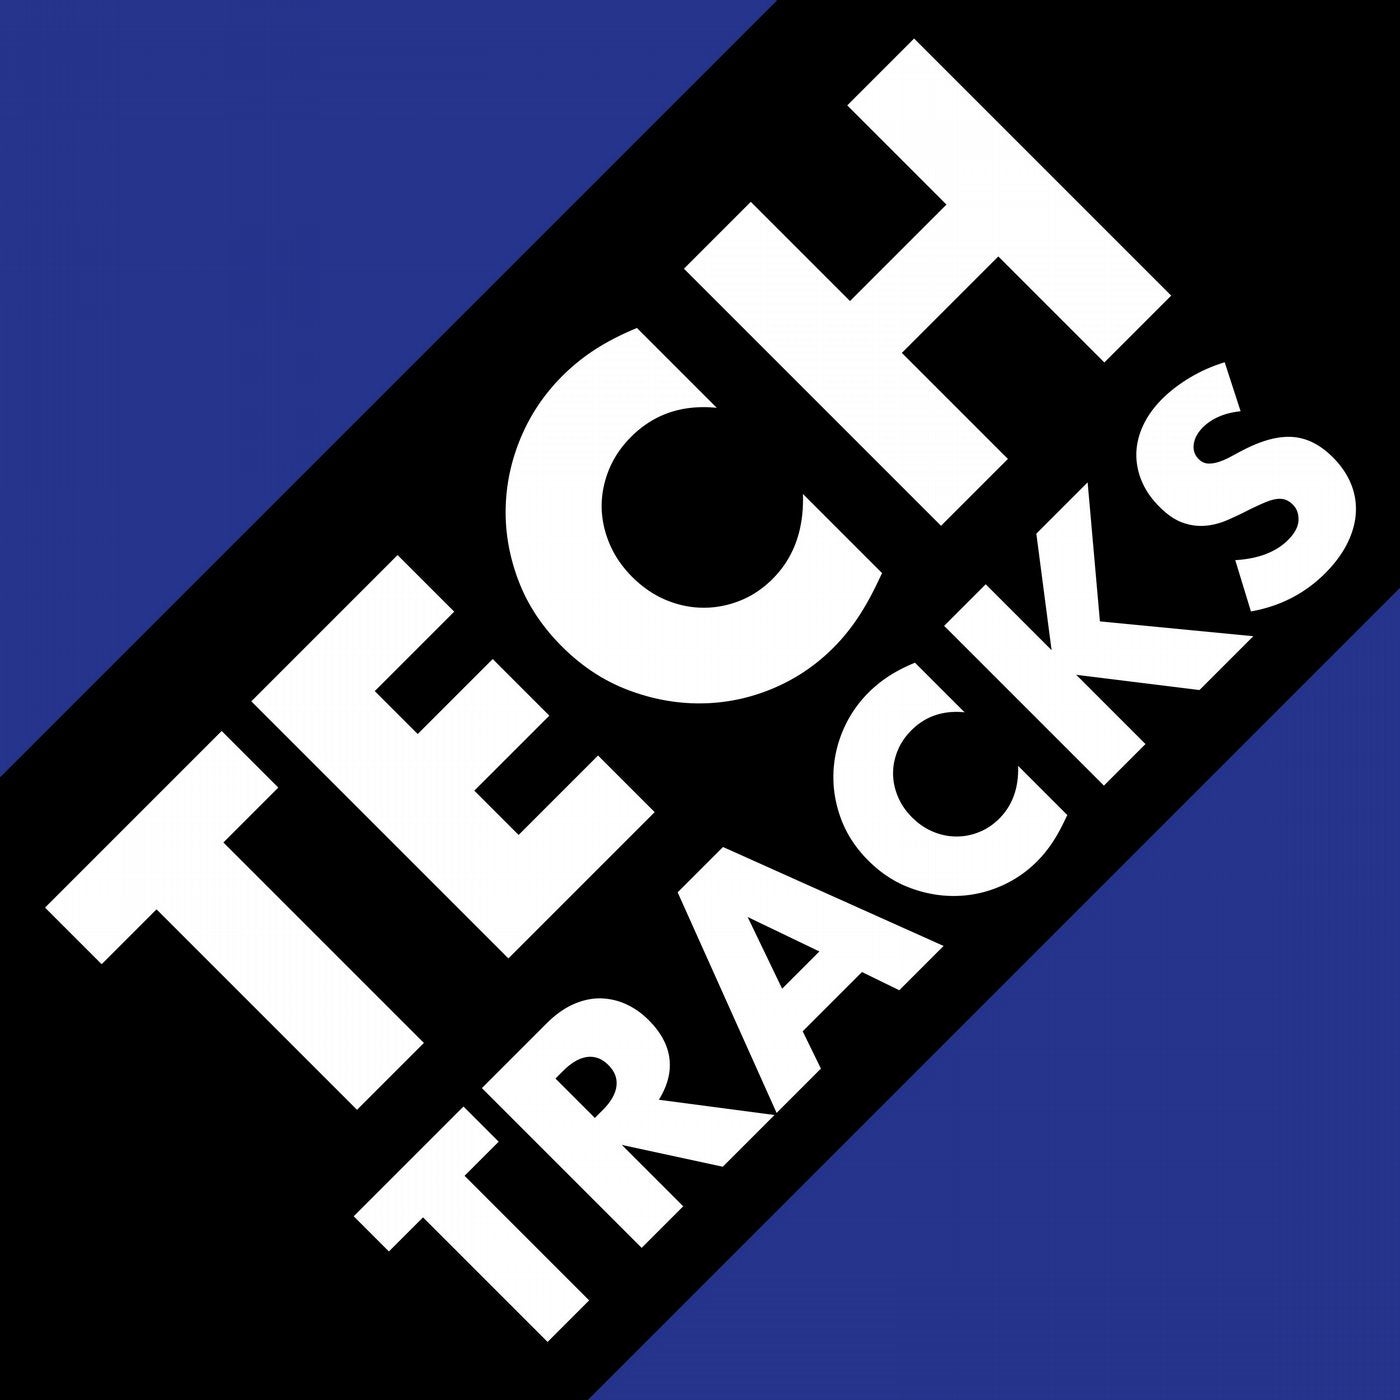 Tech Tracks